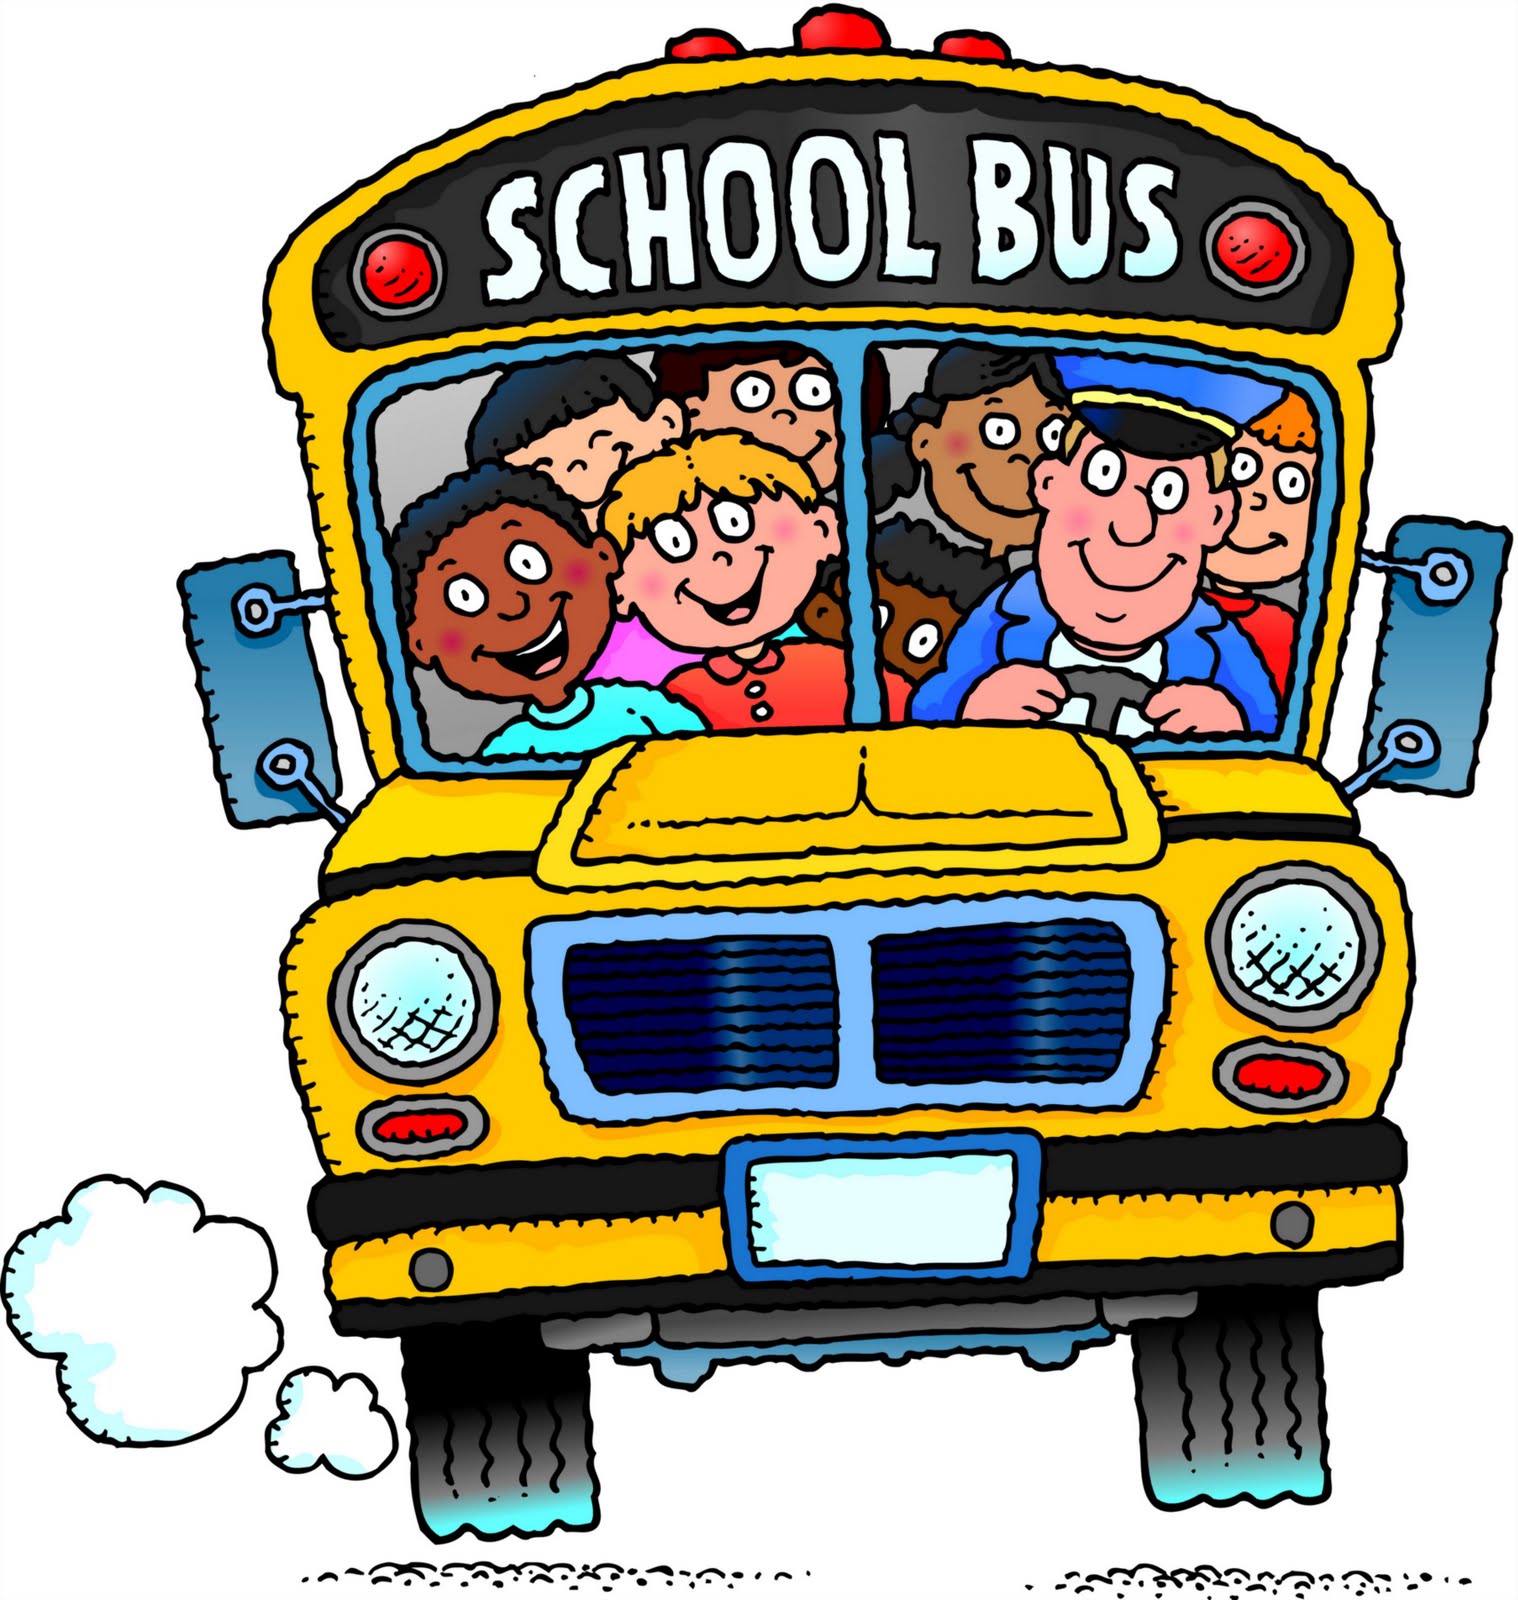 School bus image clipart